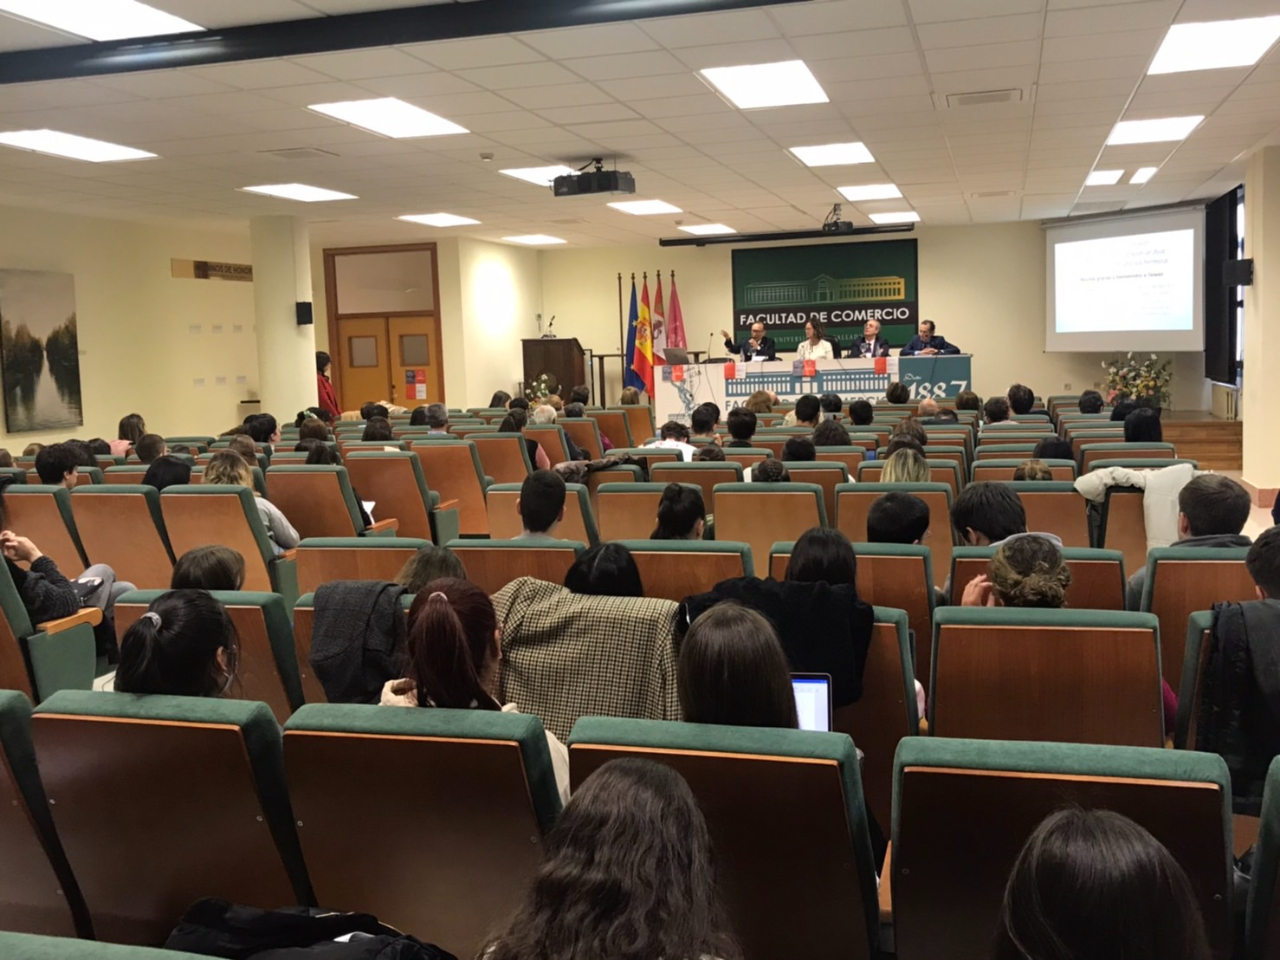 Valladolid大學師生踴躍出席劉大使(左1)演講向演講情形。